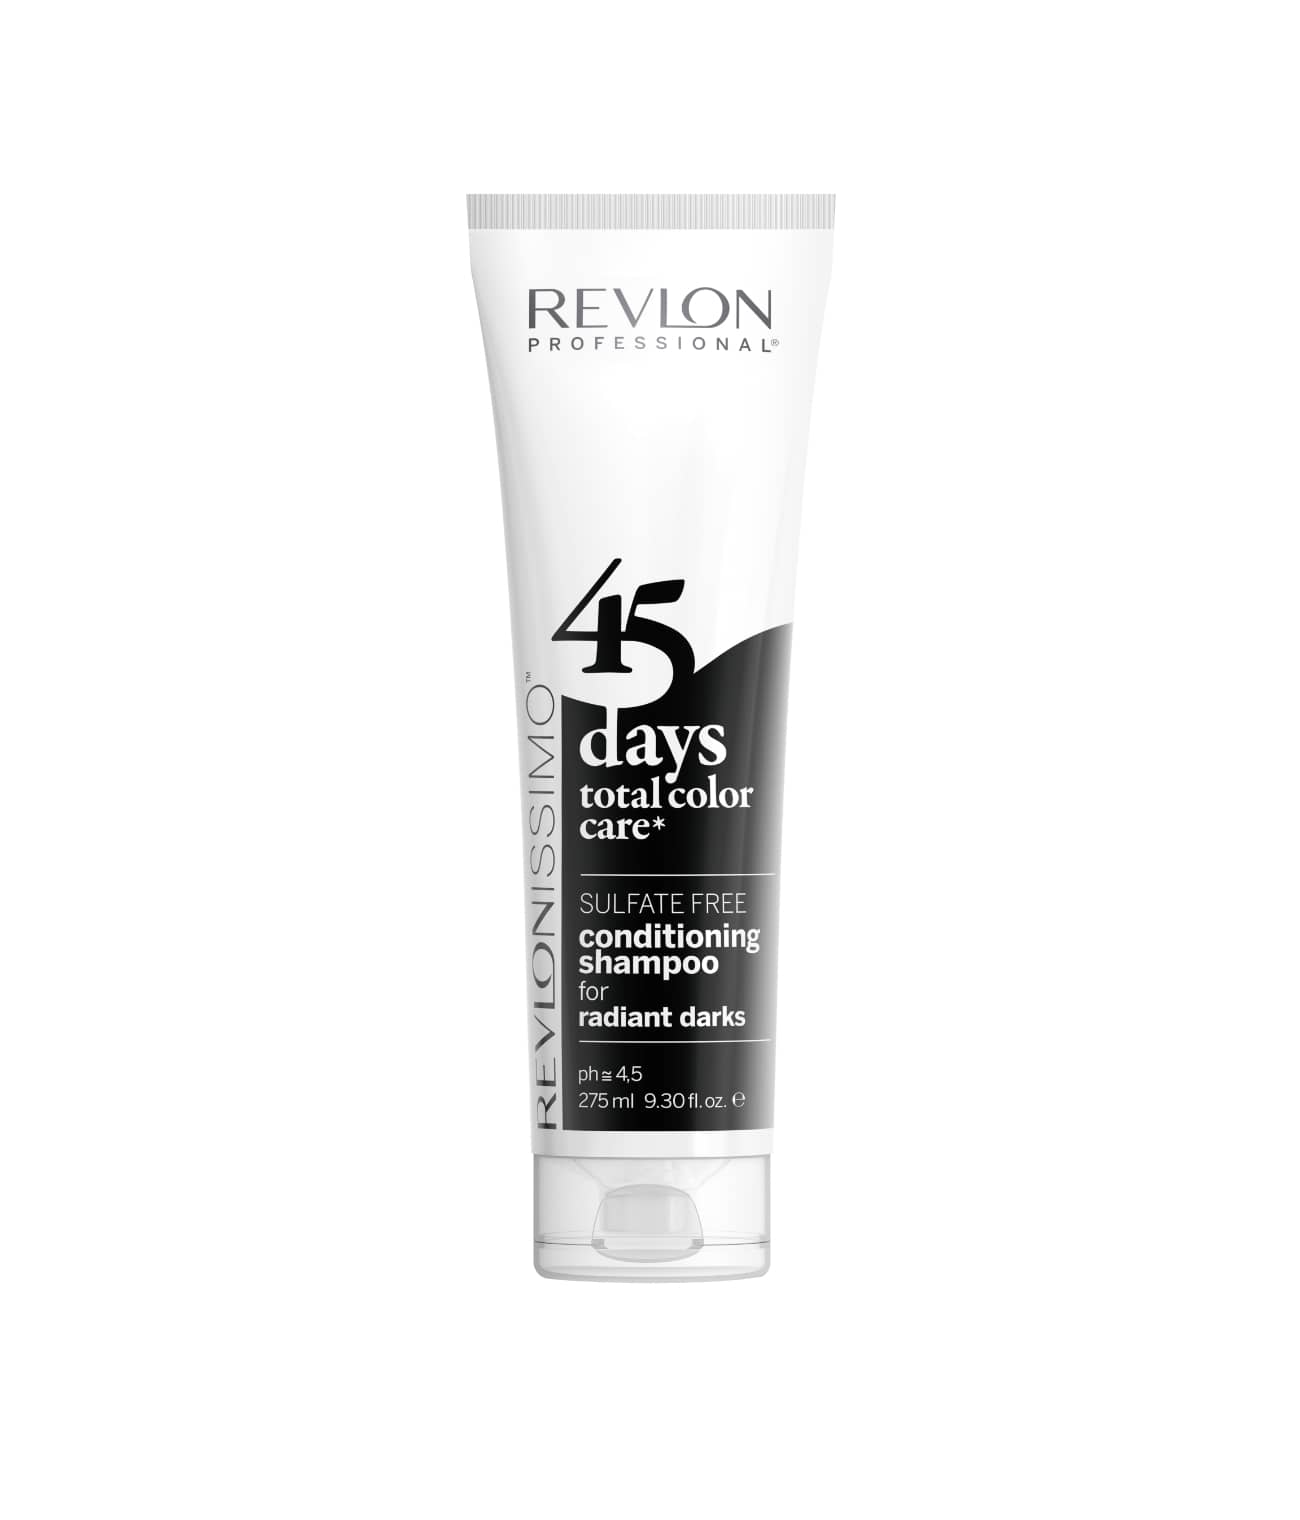 Revlonissimo 45 Days Radiant Darks Shampoo - Sagema